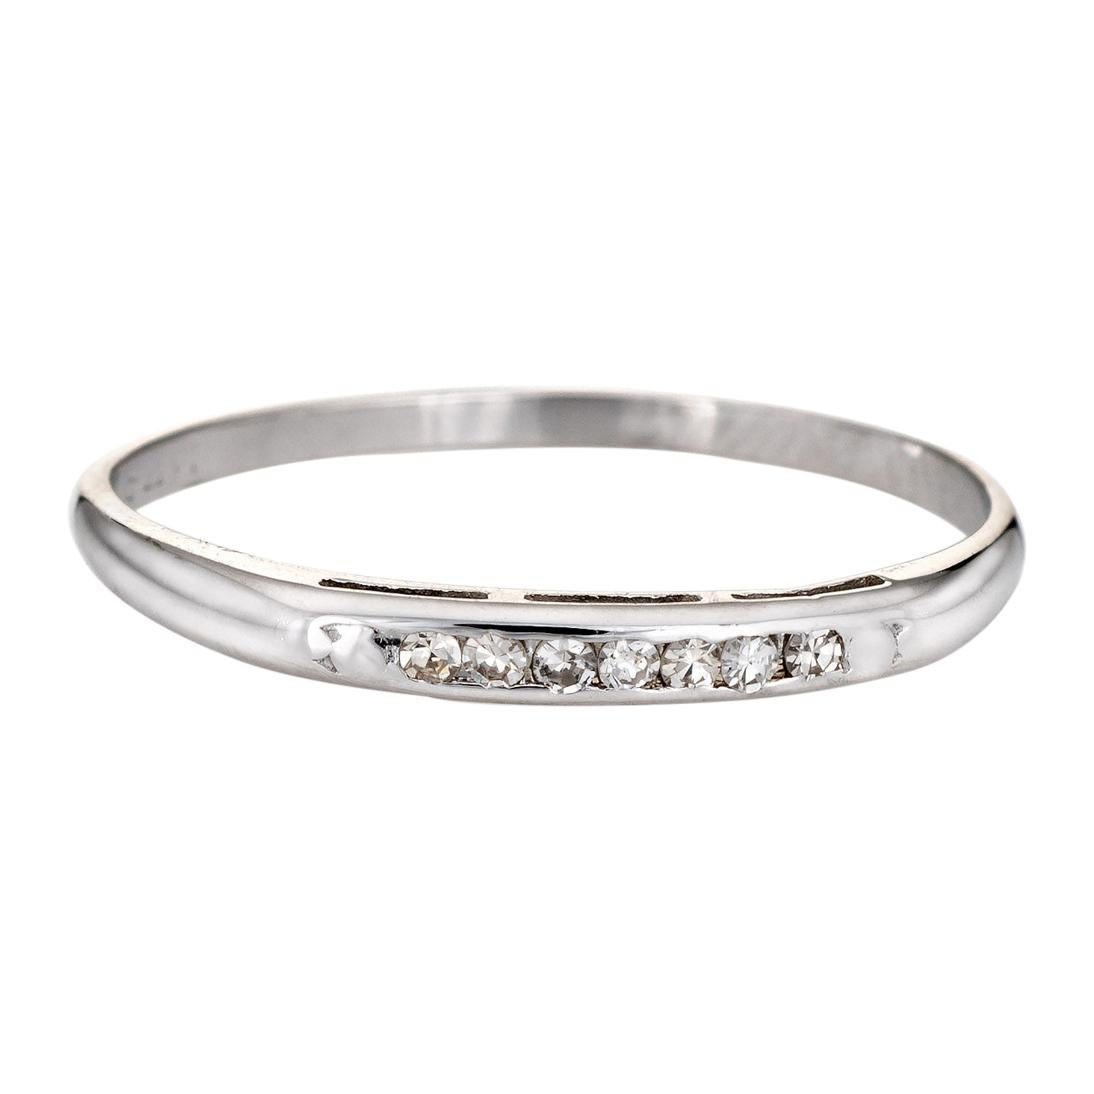 Vintage Art Deco Diamond Ring 18 Karat White Gold Wedding Band Fine Jewelry